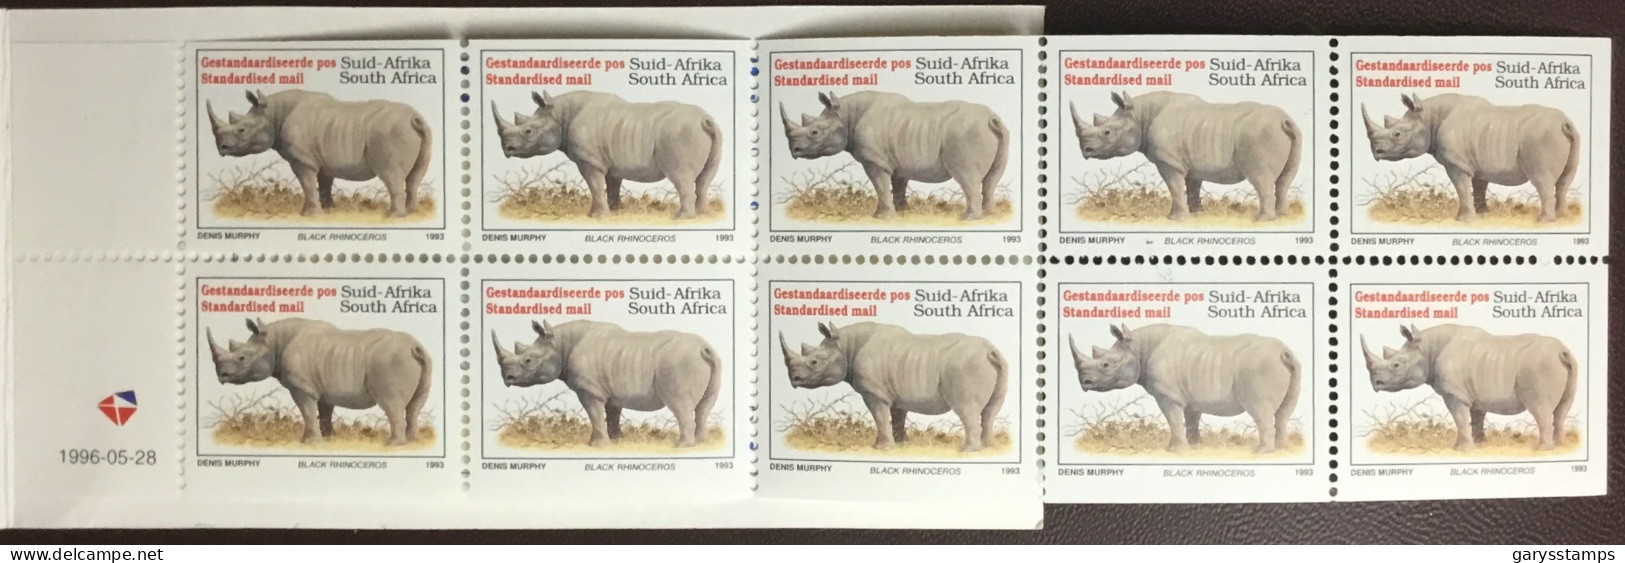 South Africa 1995 Standardised Mail Rhino Animals Booklet Unused - Rinoceronti